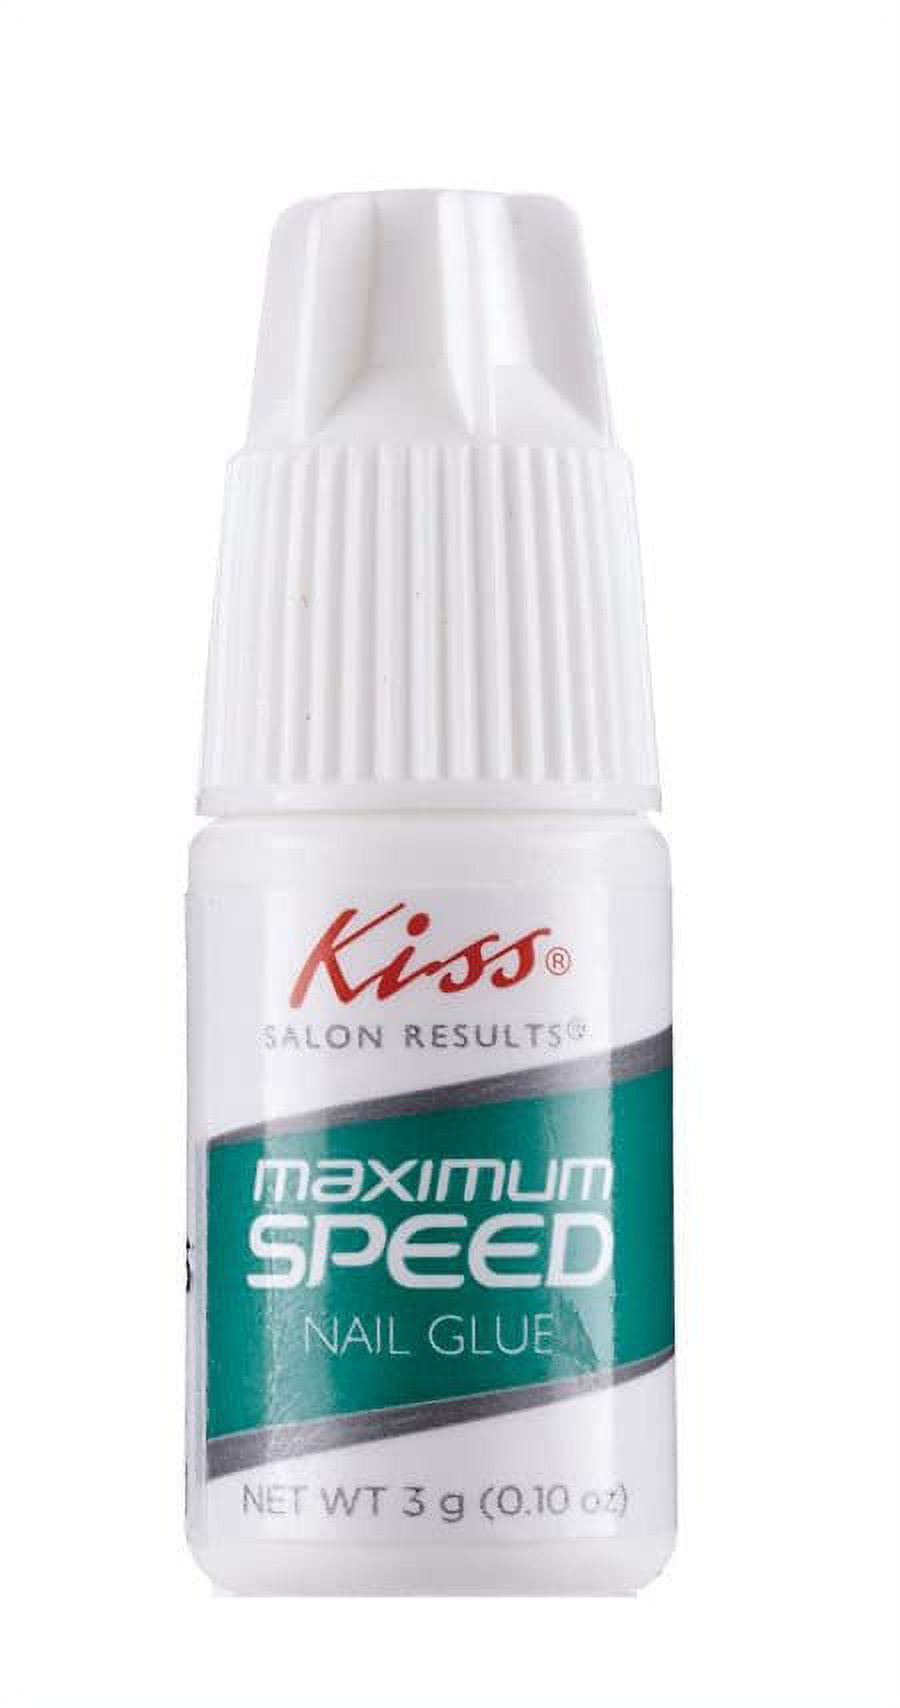 KISS French Acrylic Nail Kit Complete Set, Press on Nails, Fake Nails - image 5 of 7